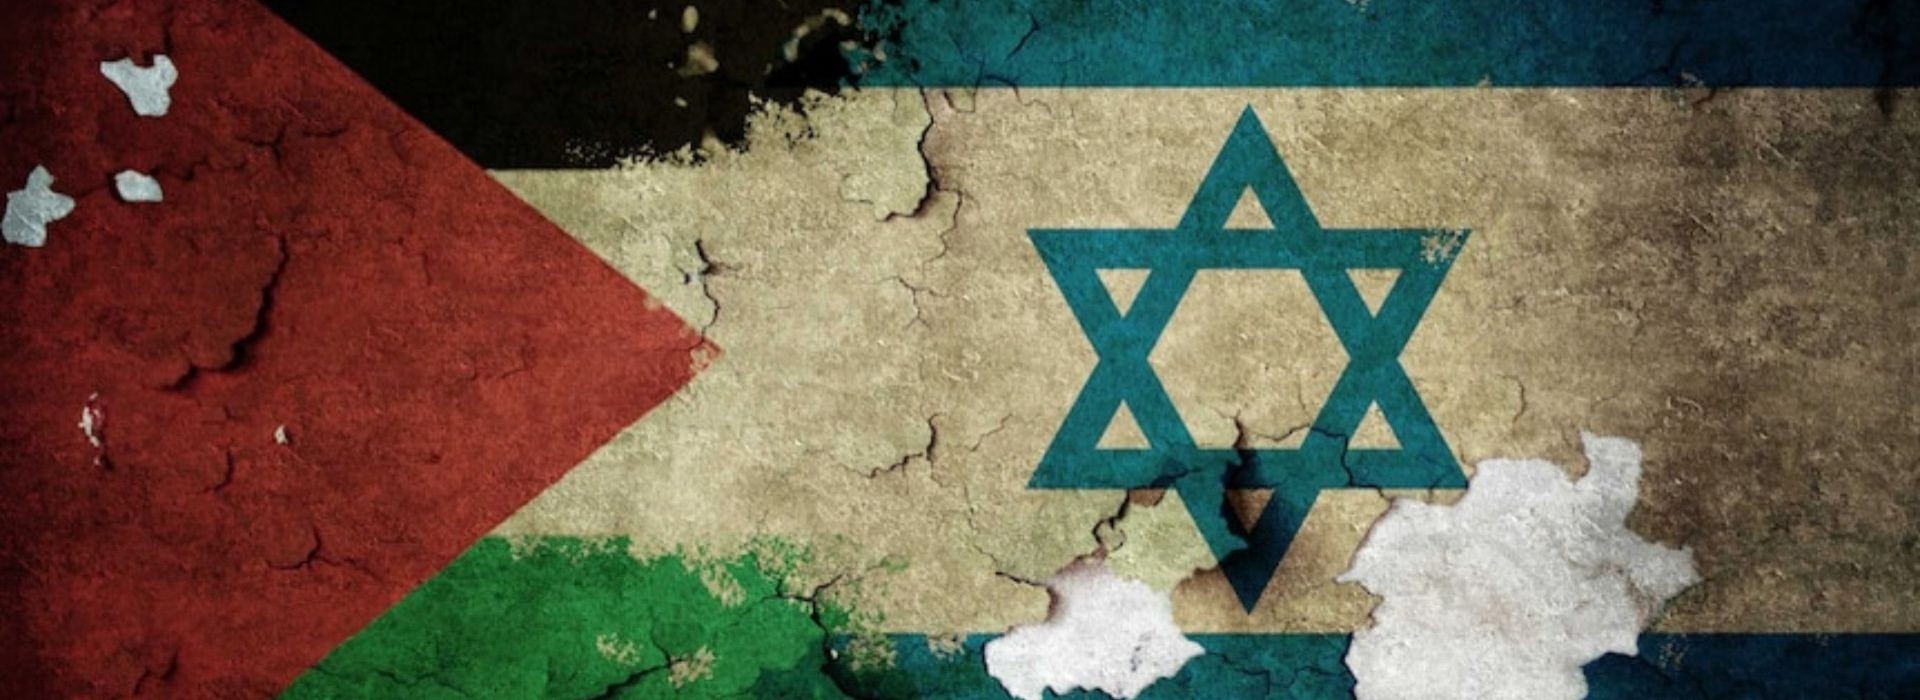 Konstanty Gebert o historii konfliktu Izrael-Palestyna